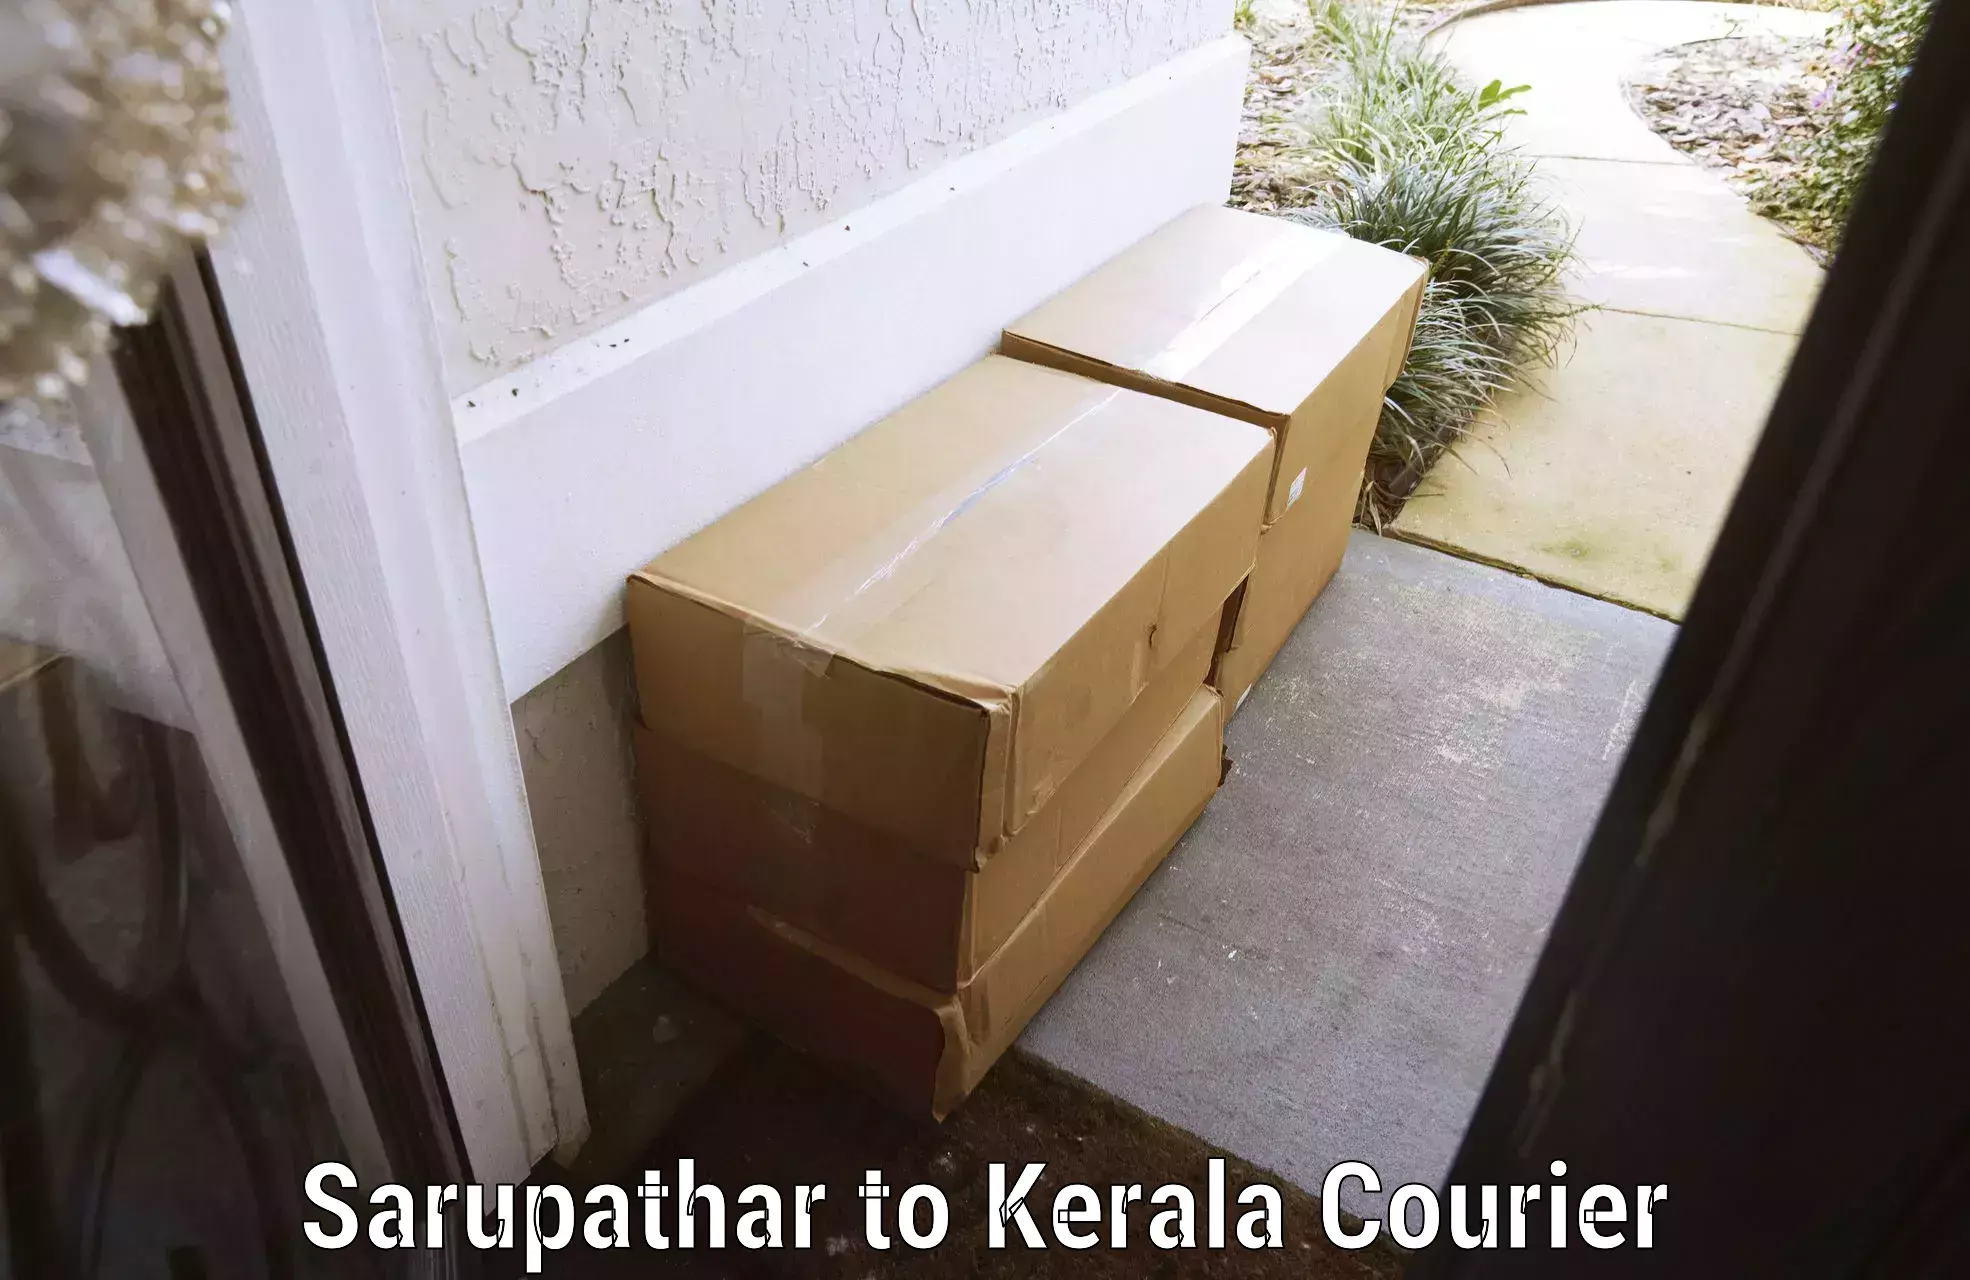 Emergency baggage service Sarupathar to Kerala